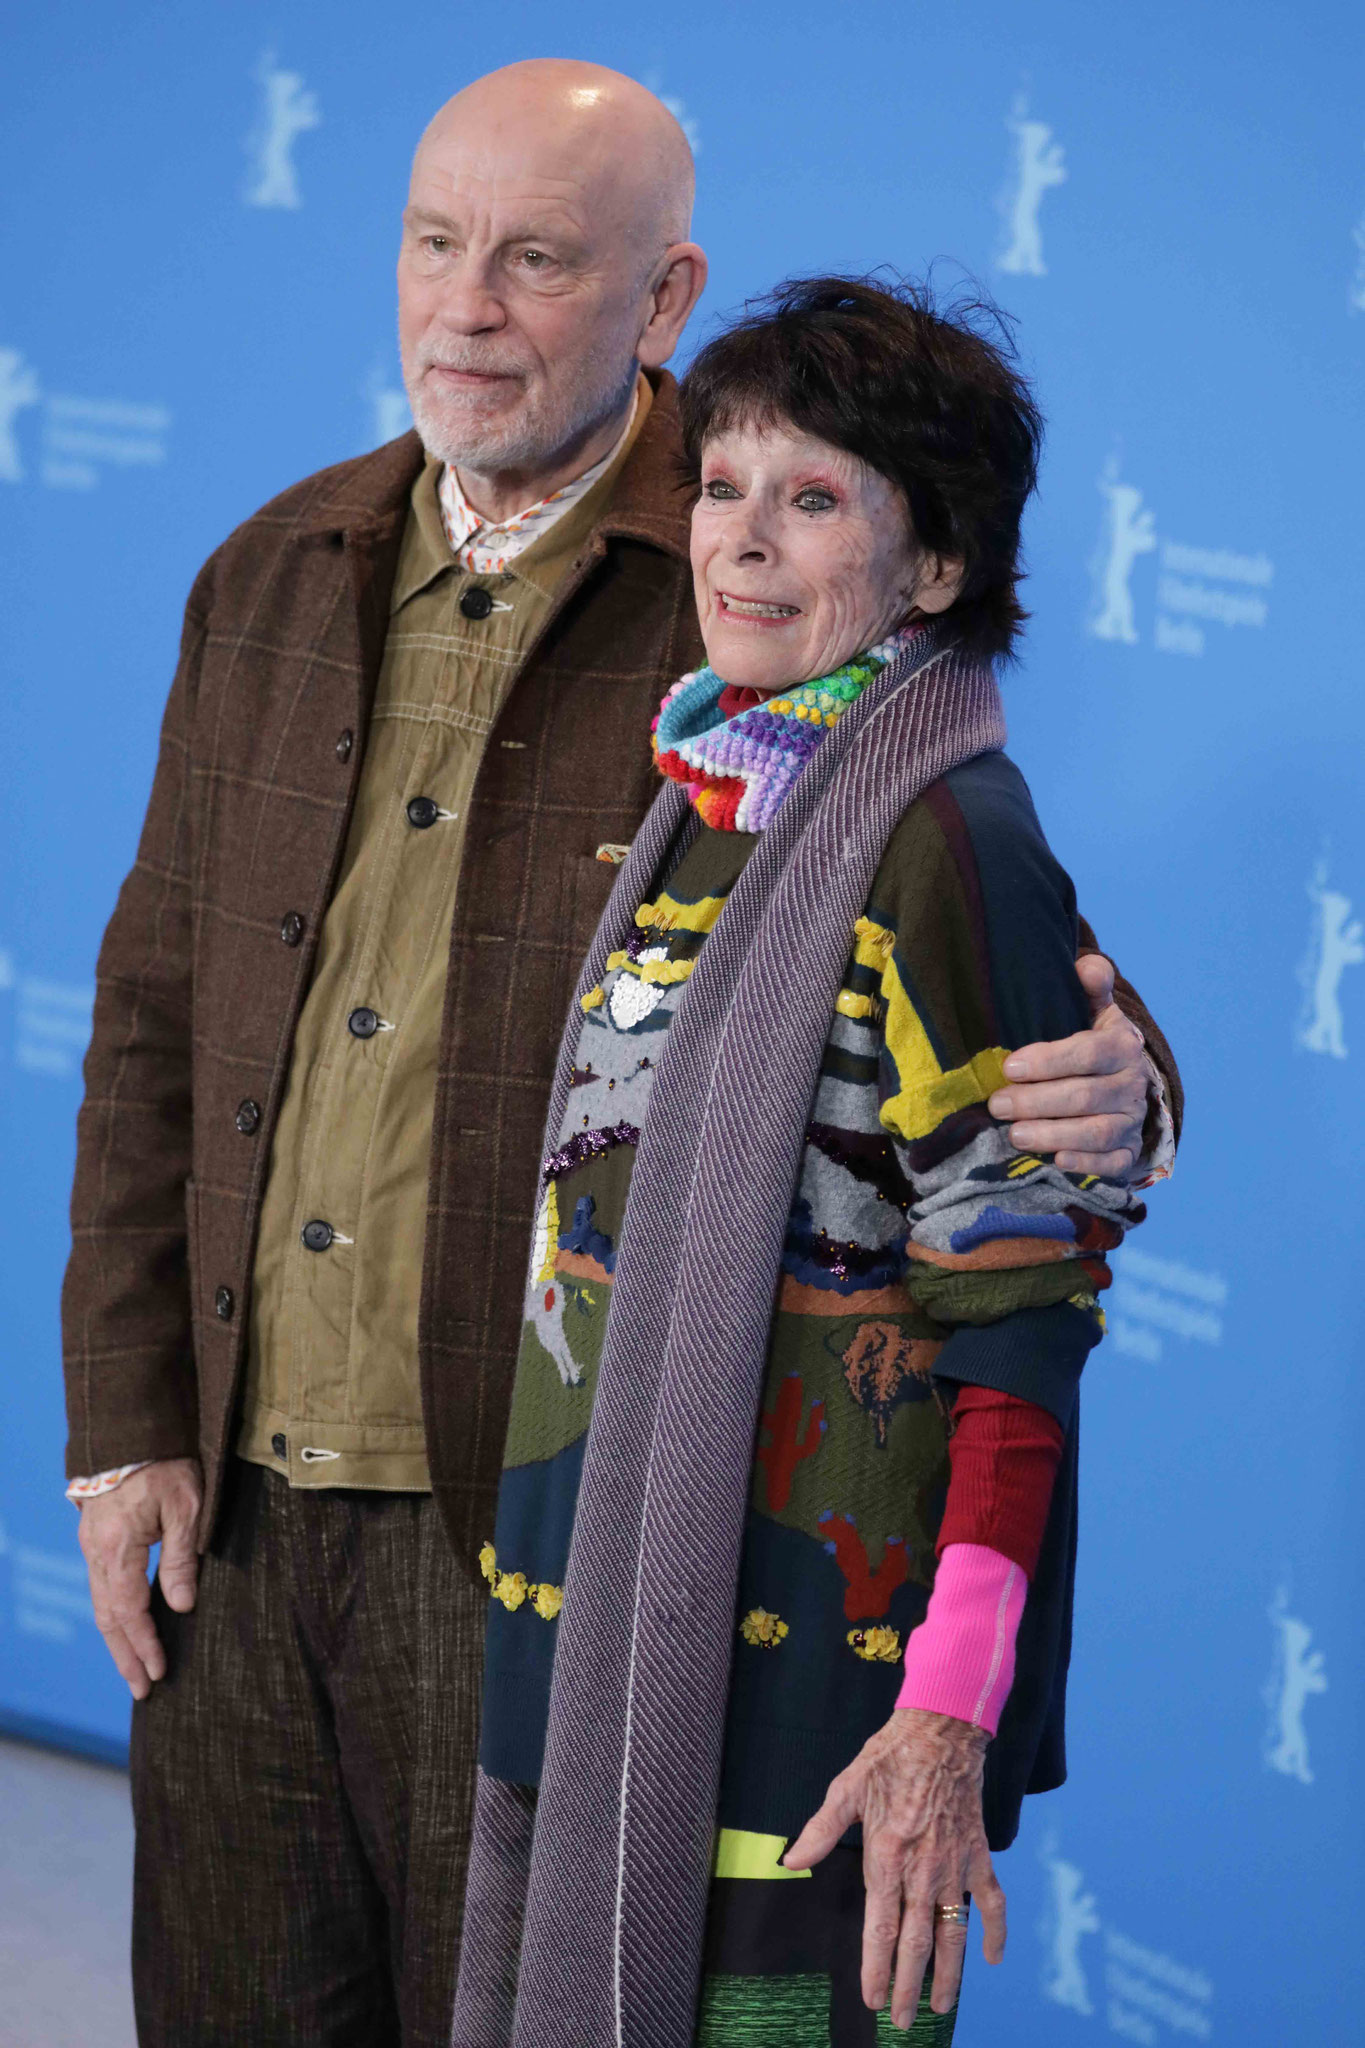 John Malkovich and Geraldine Chaplin during the photo call for the film "Seneca".